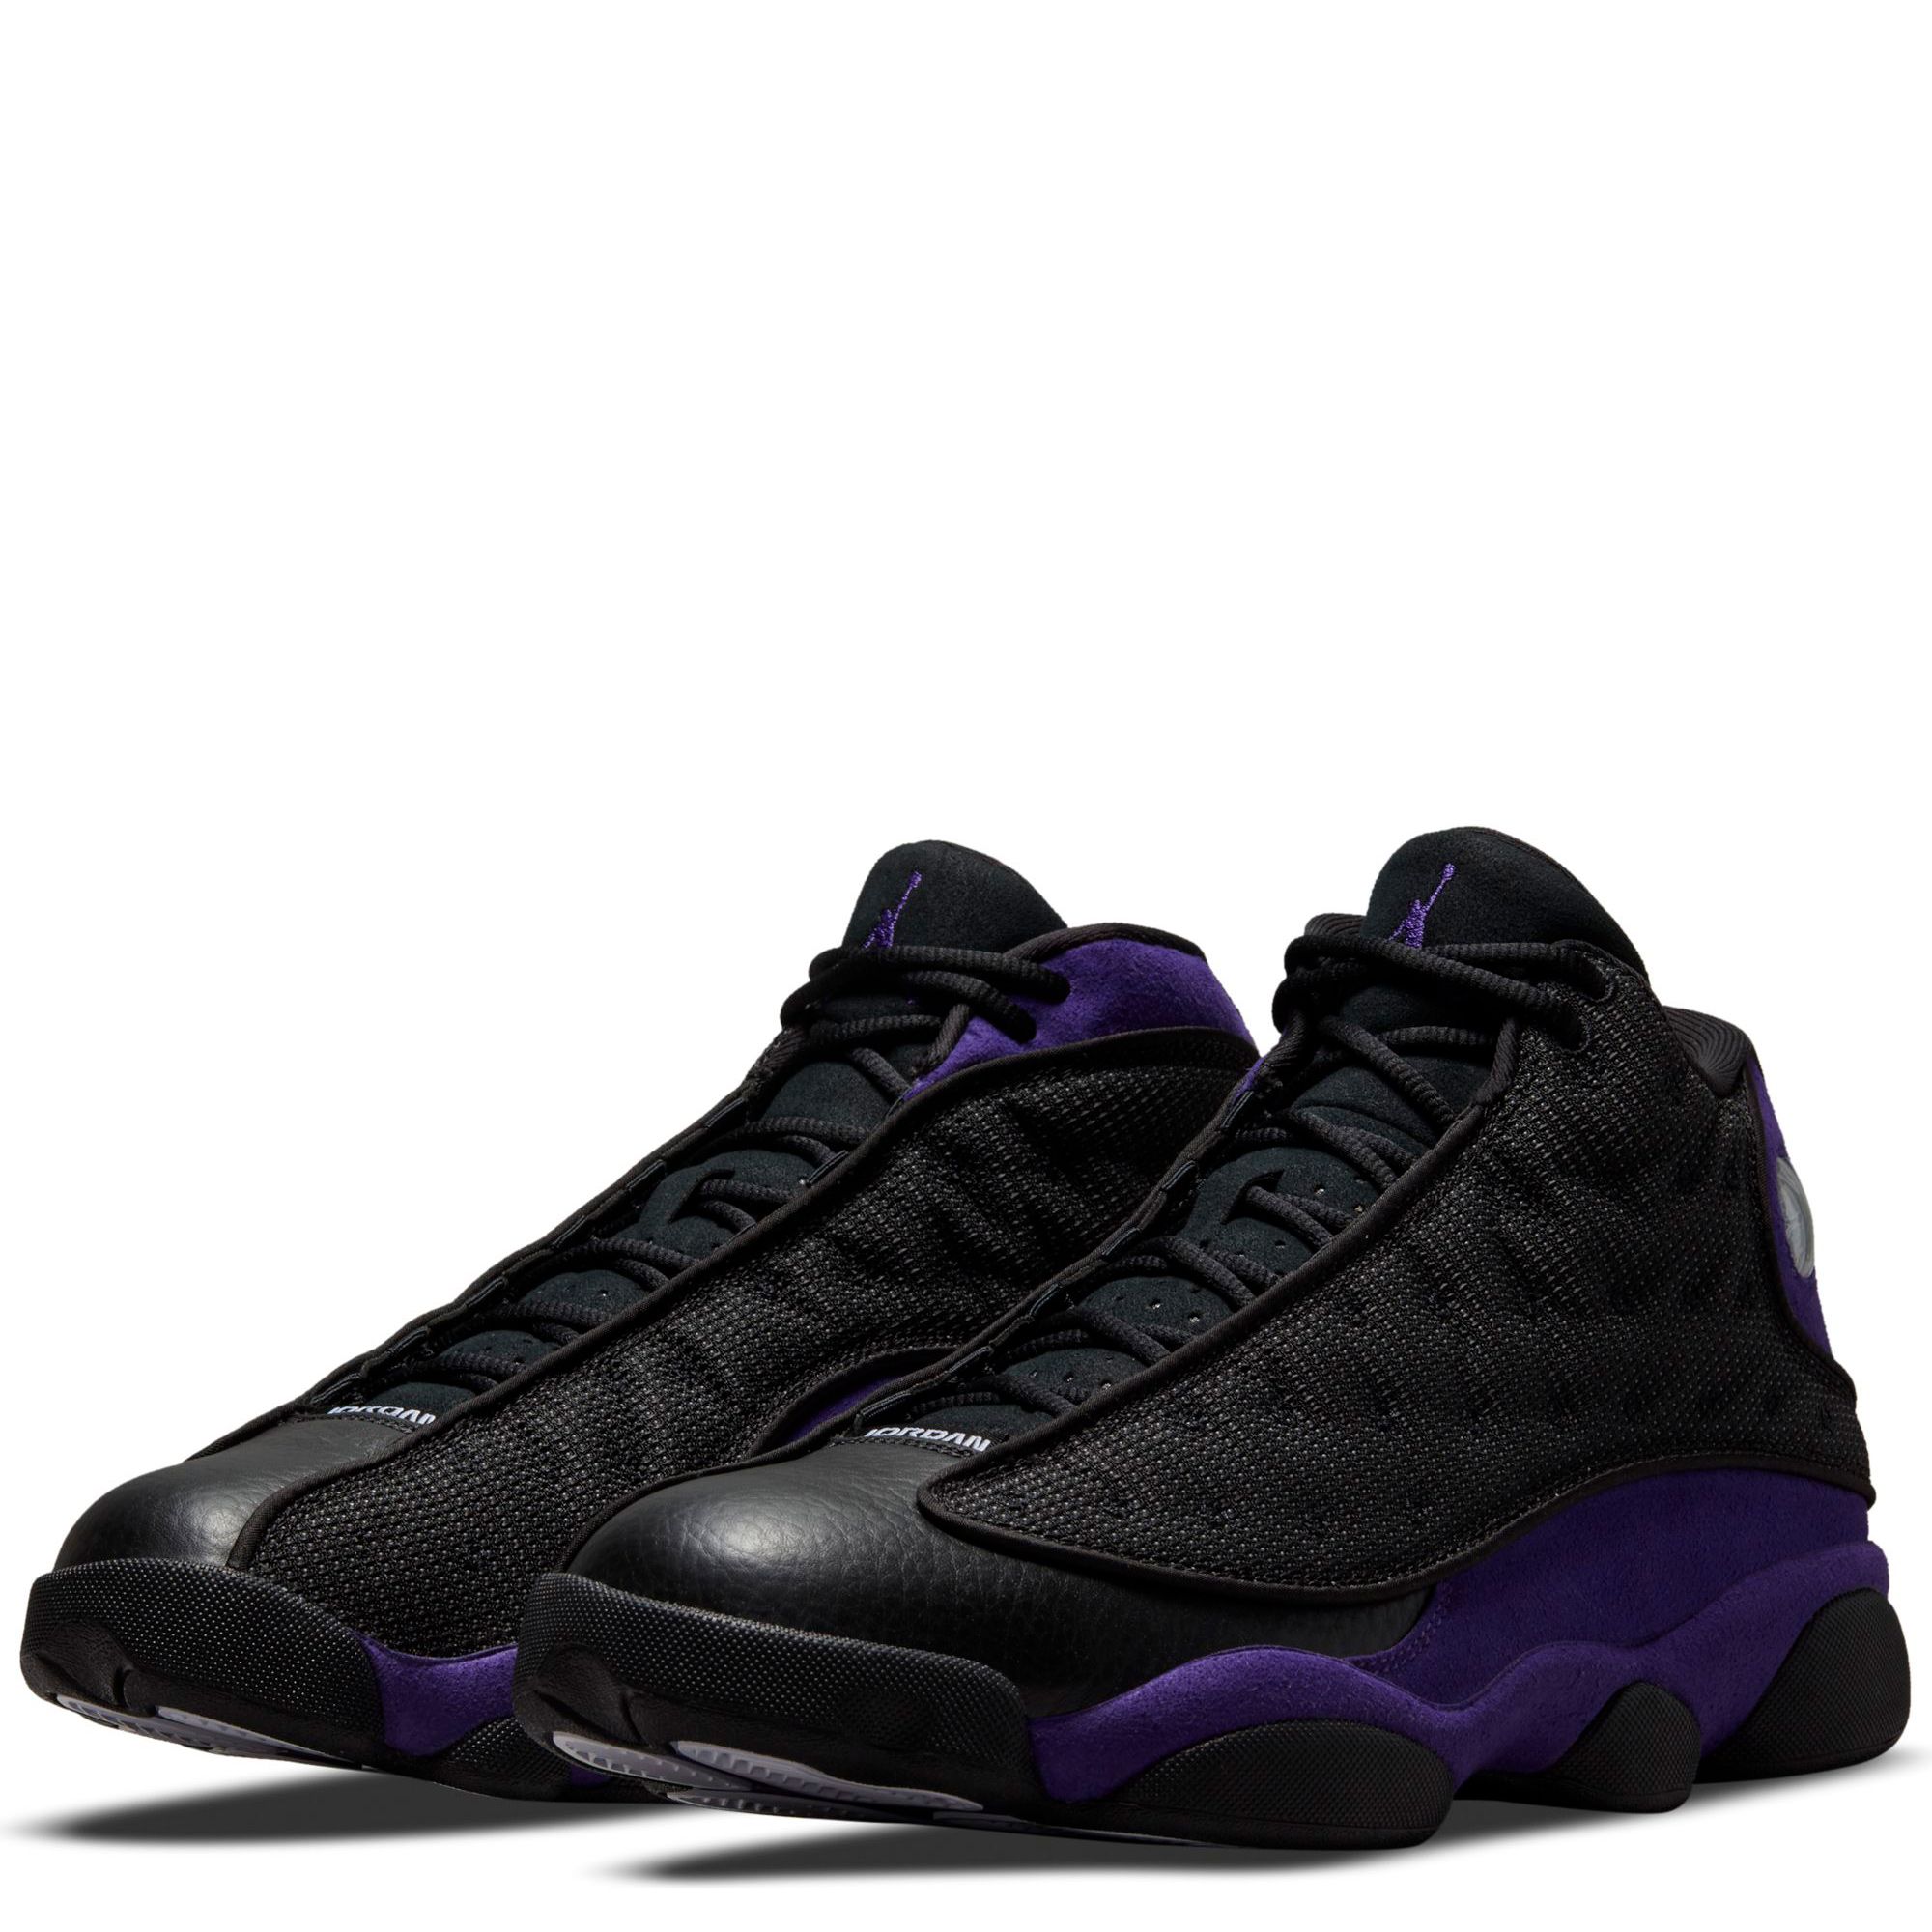 Retro Jordan 13 Court Purple Review + on feet! 